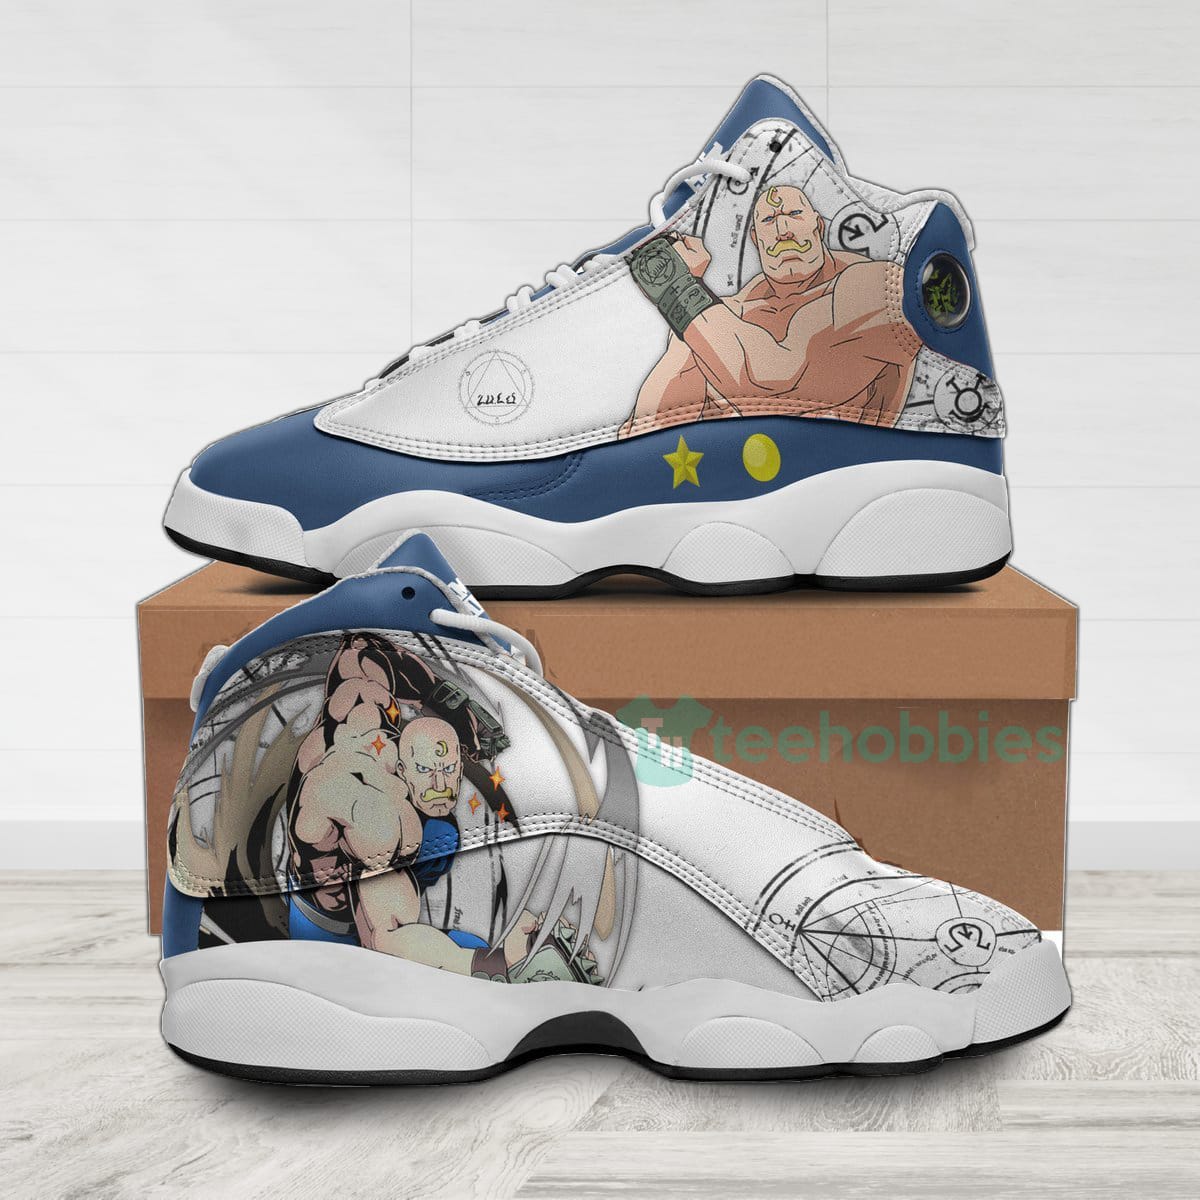 Alex Louis Armstrong Custom Anime Fullmetal Alchemist Air Jordan 13 Shoes Product photo 1